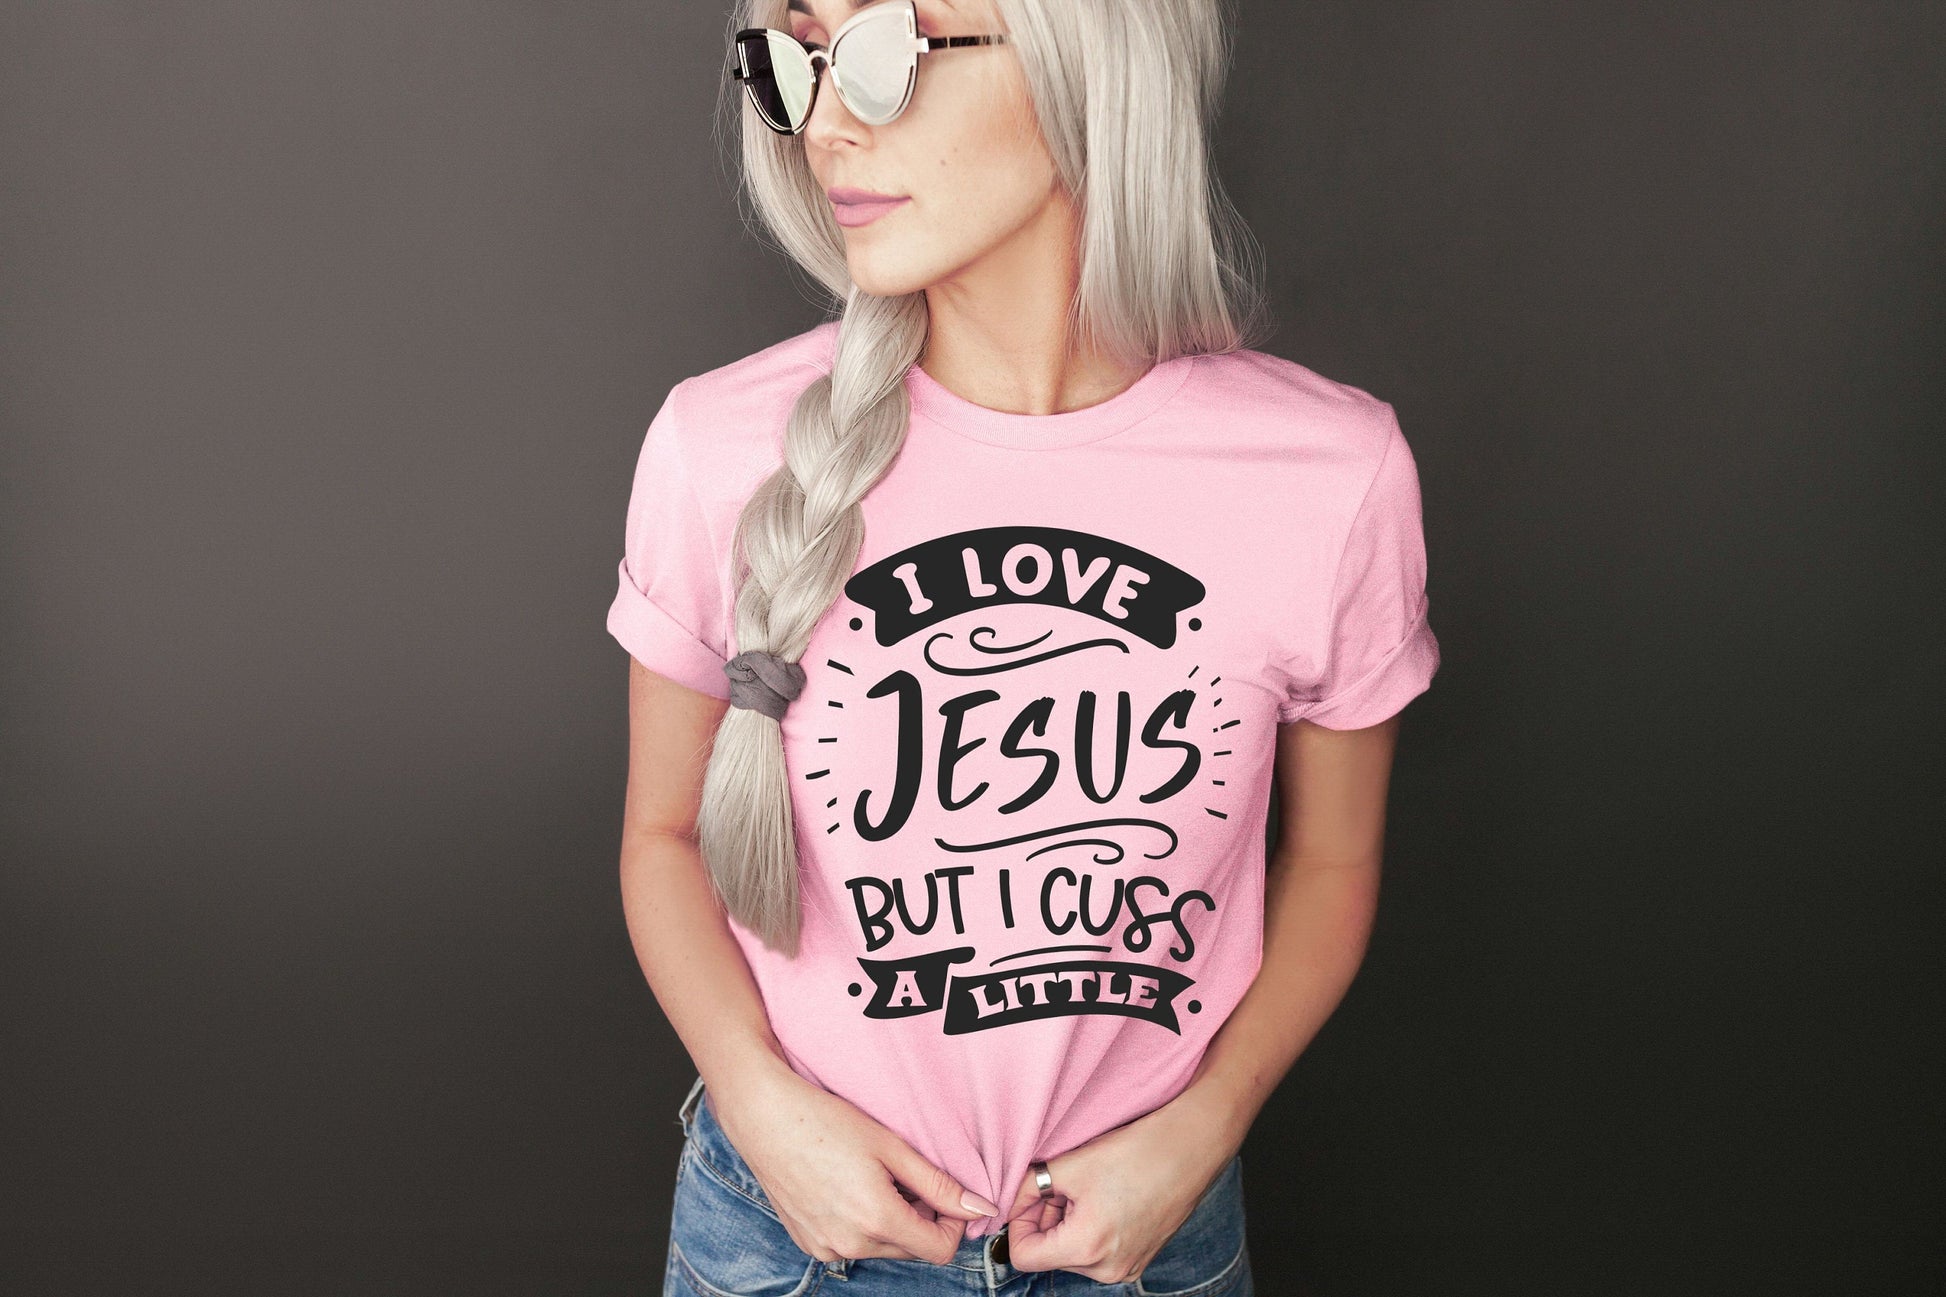 I Love Jesus But I Cuss a Little t-shirt, christian shirt, funny jesus shirt, jesus tshirt, religious shirts, southern shirt, southern style